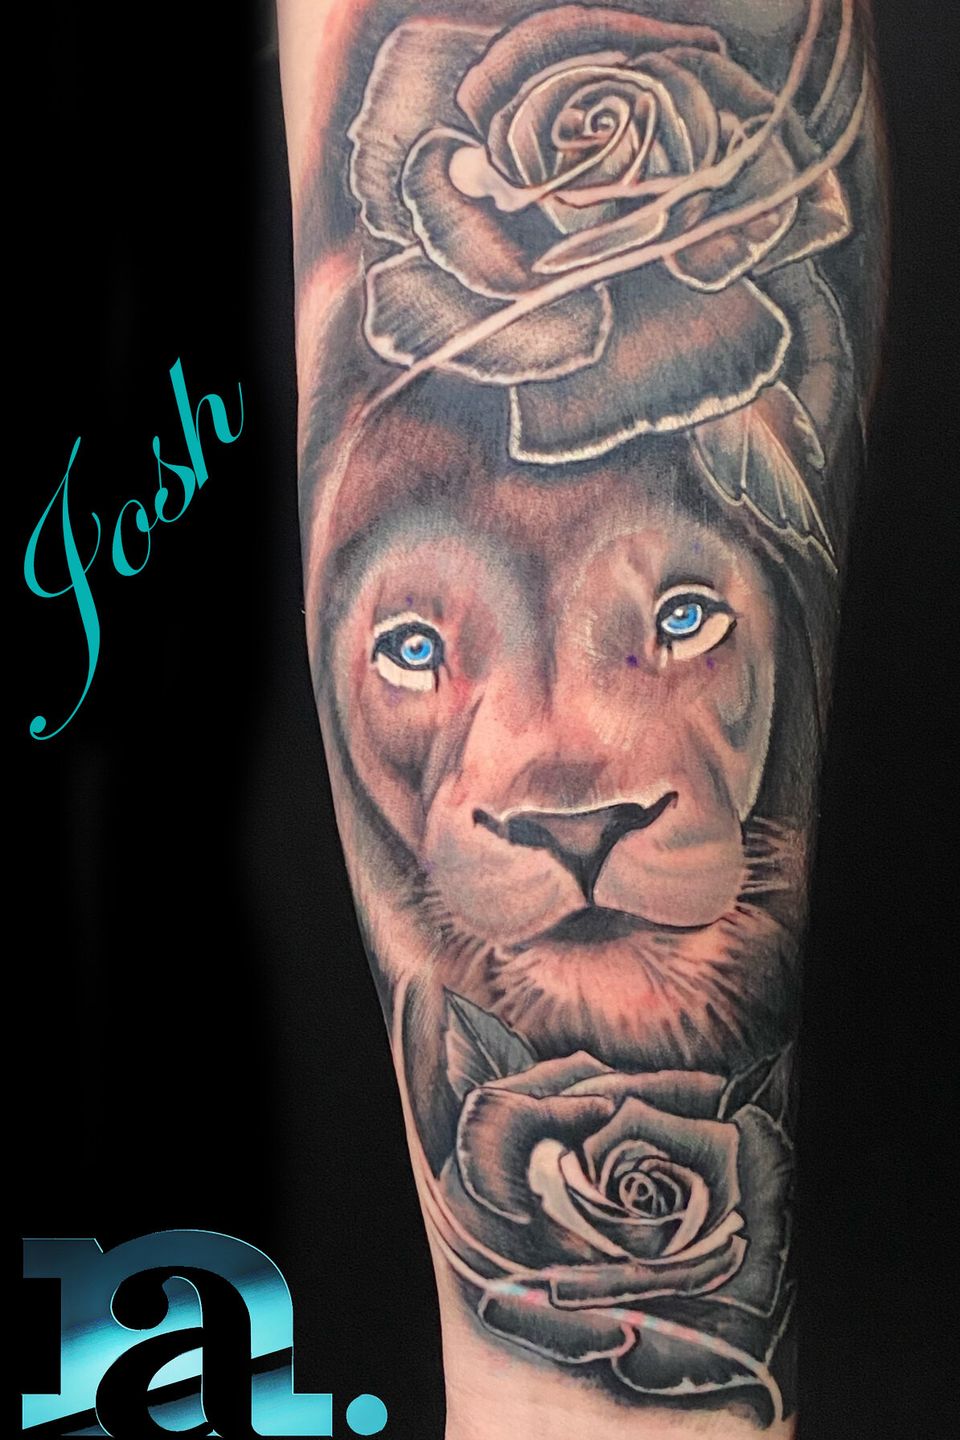 Josh lion rose